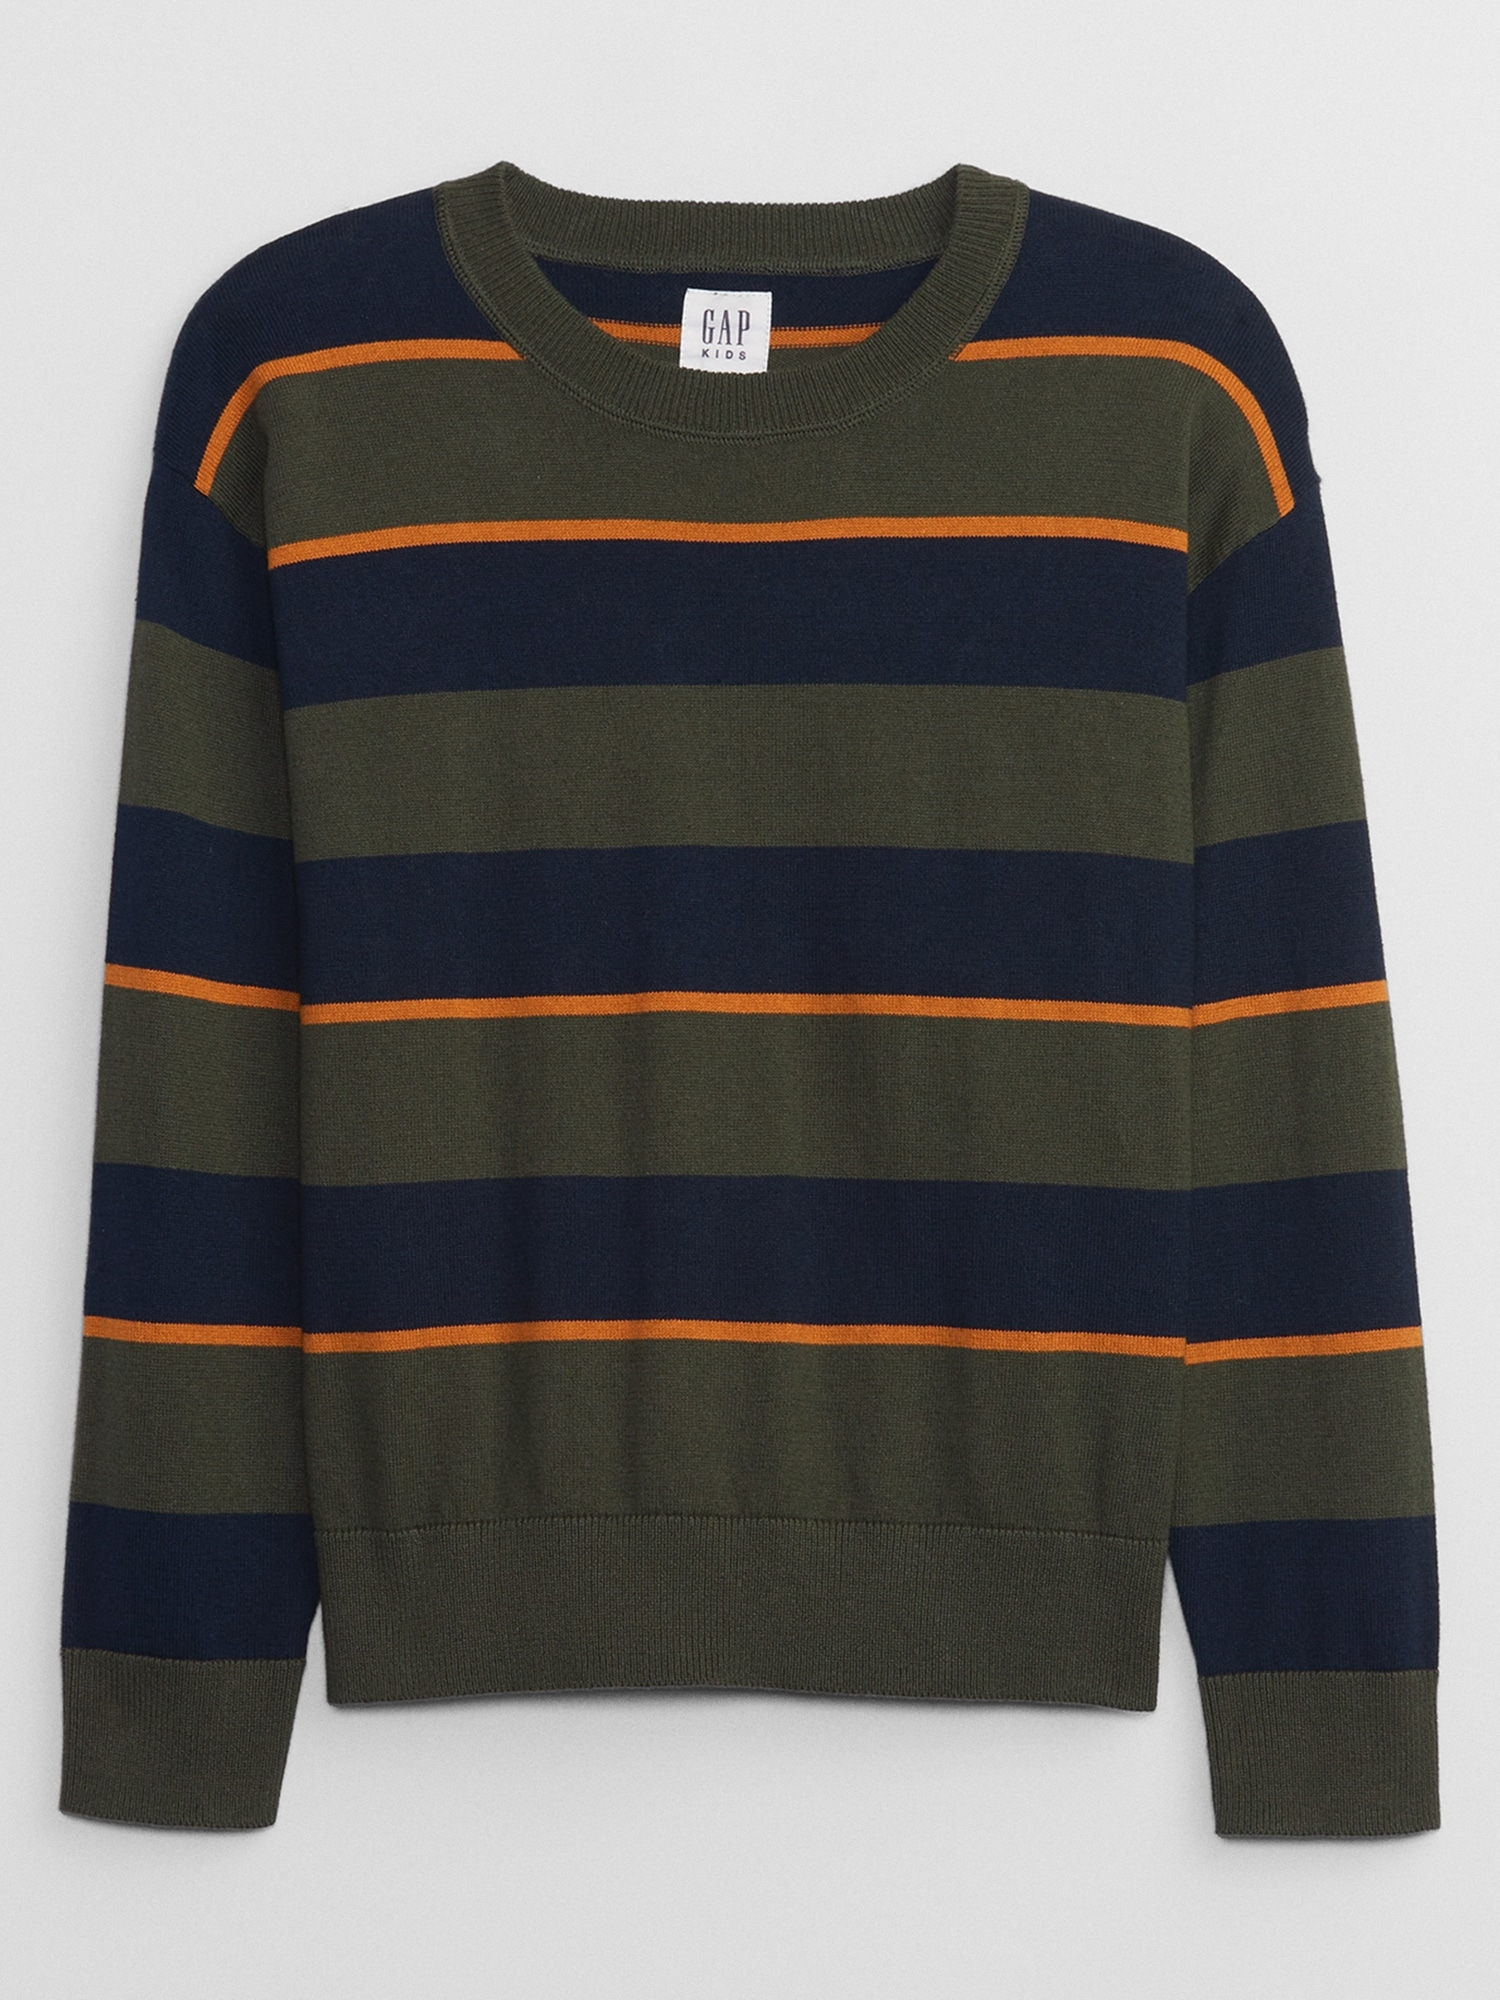 Kids Crewneck | Sweater Stripe Factory Gap